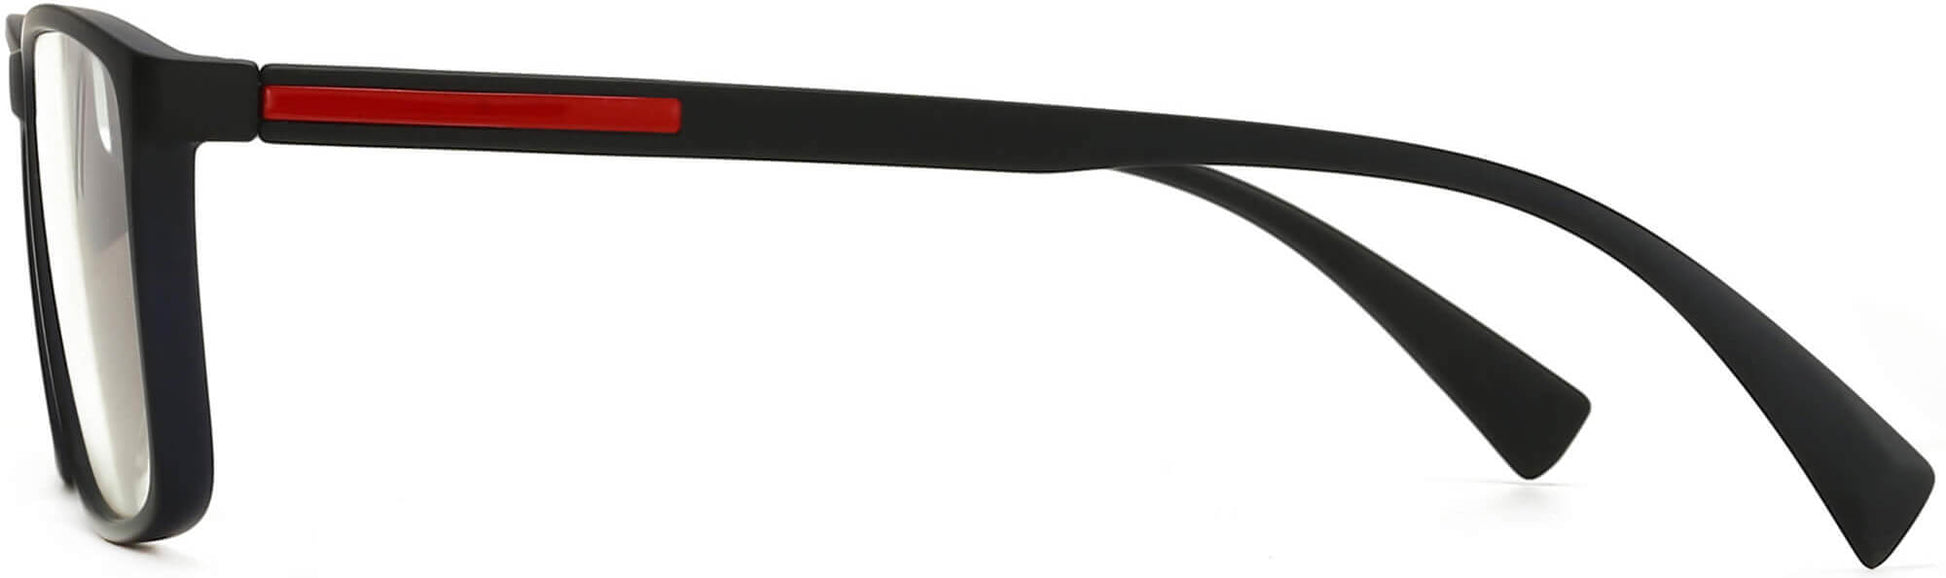 Leo Rectangle Black Eyeglasses from ANRRI, side view